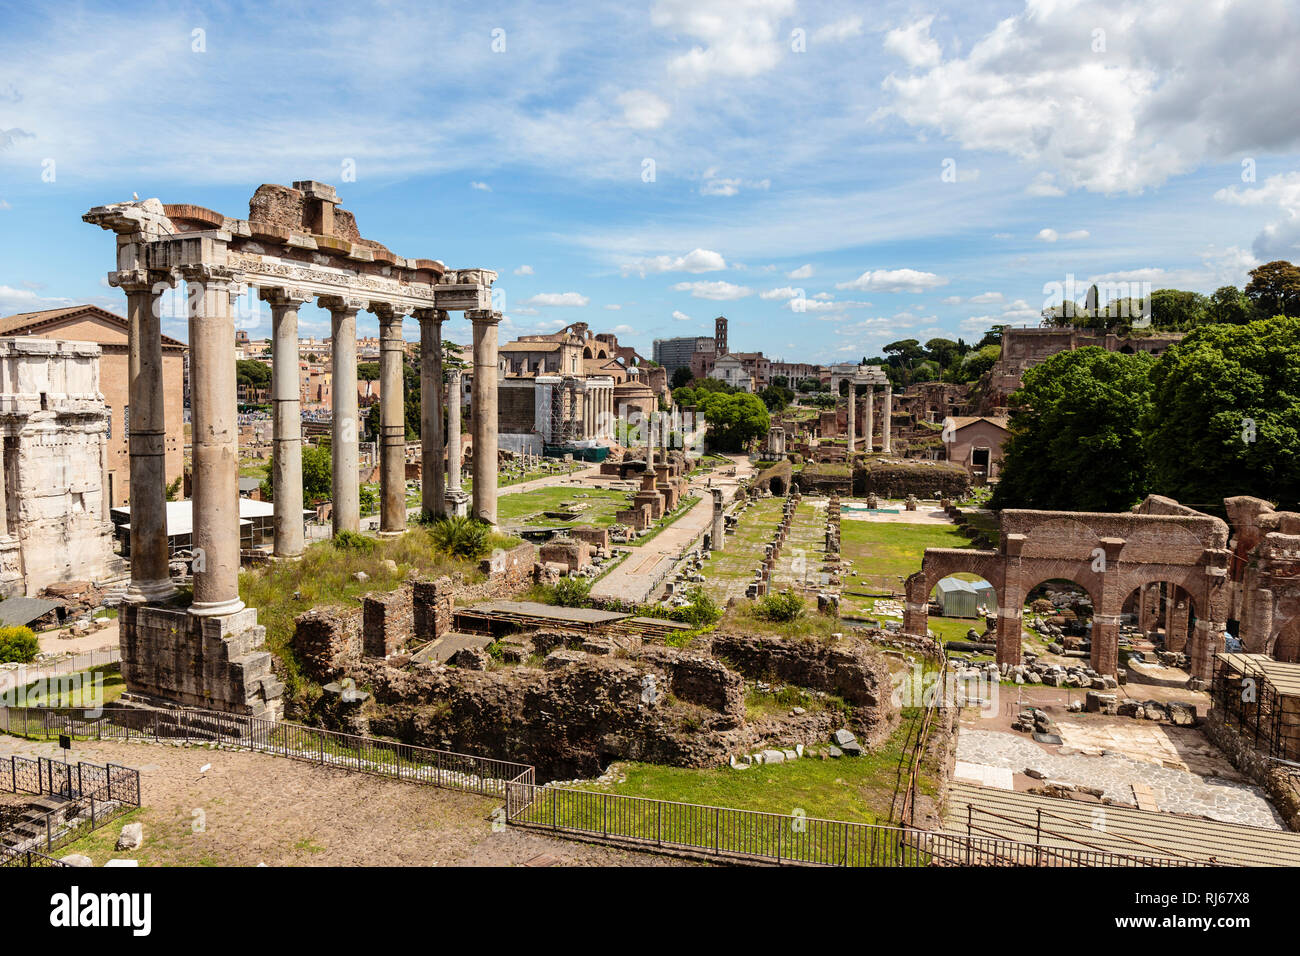 Europa, Italien, Latium, Rom, Tagsüber am menschenleeren Forum Romanum, Stock Photo